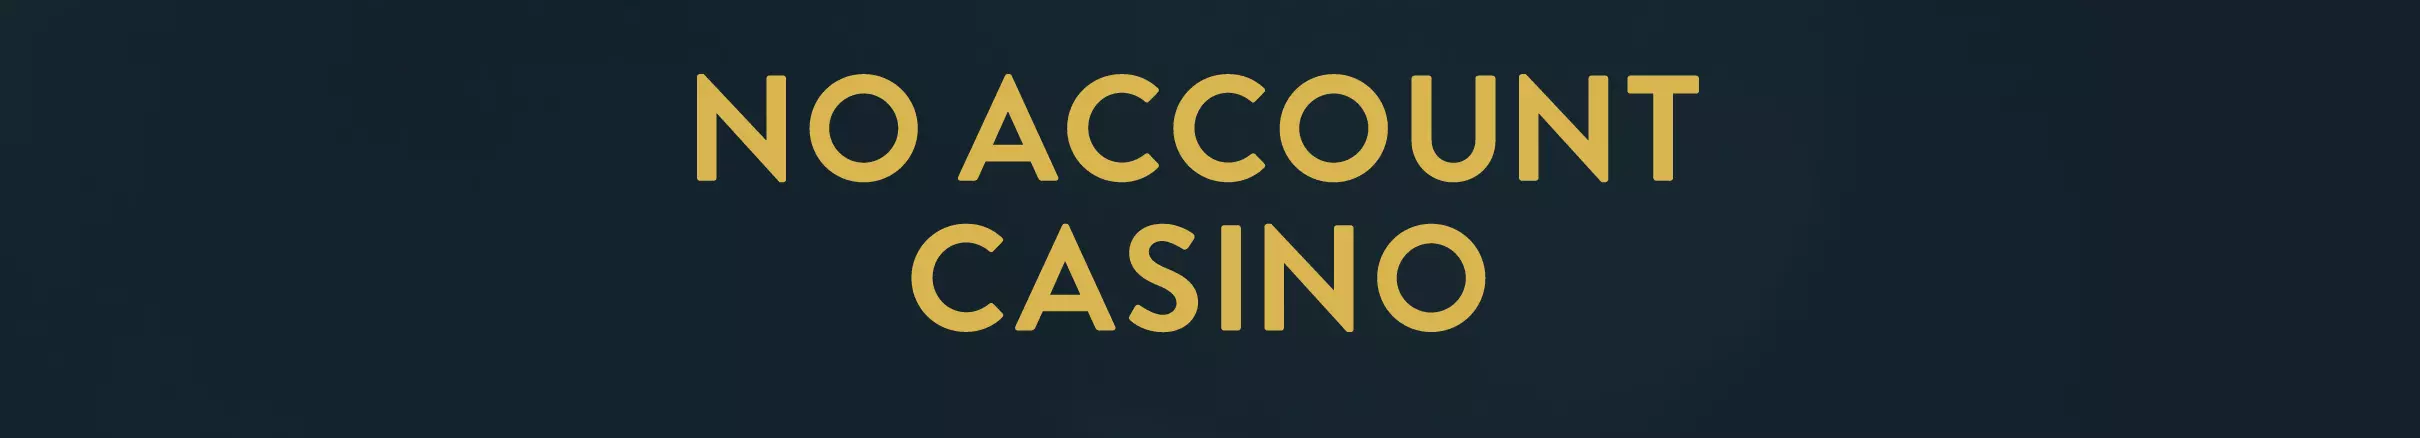 no account casino recension